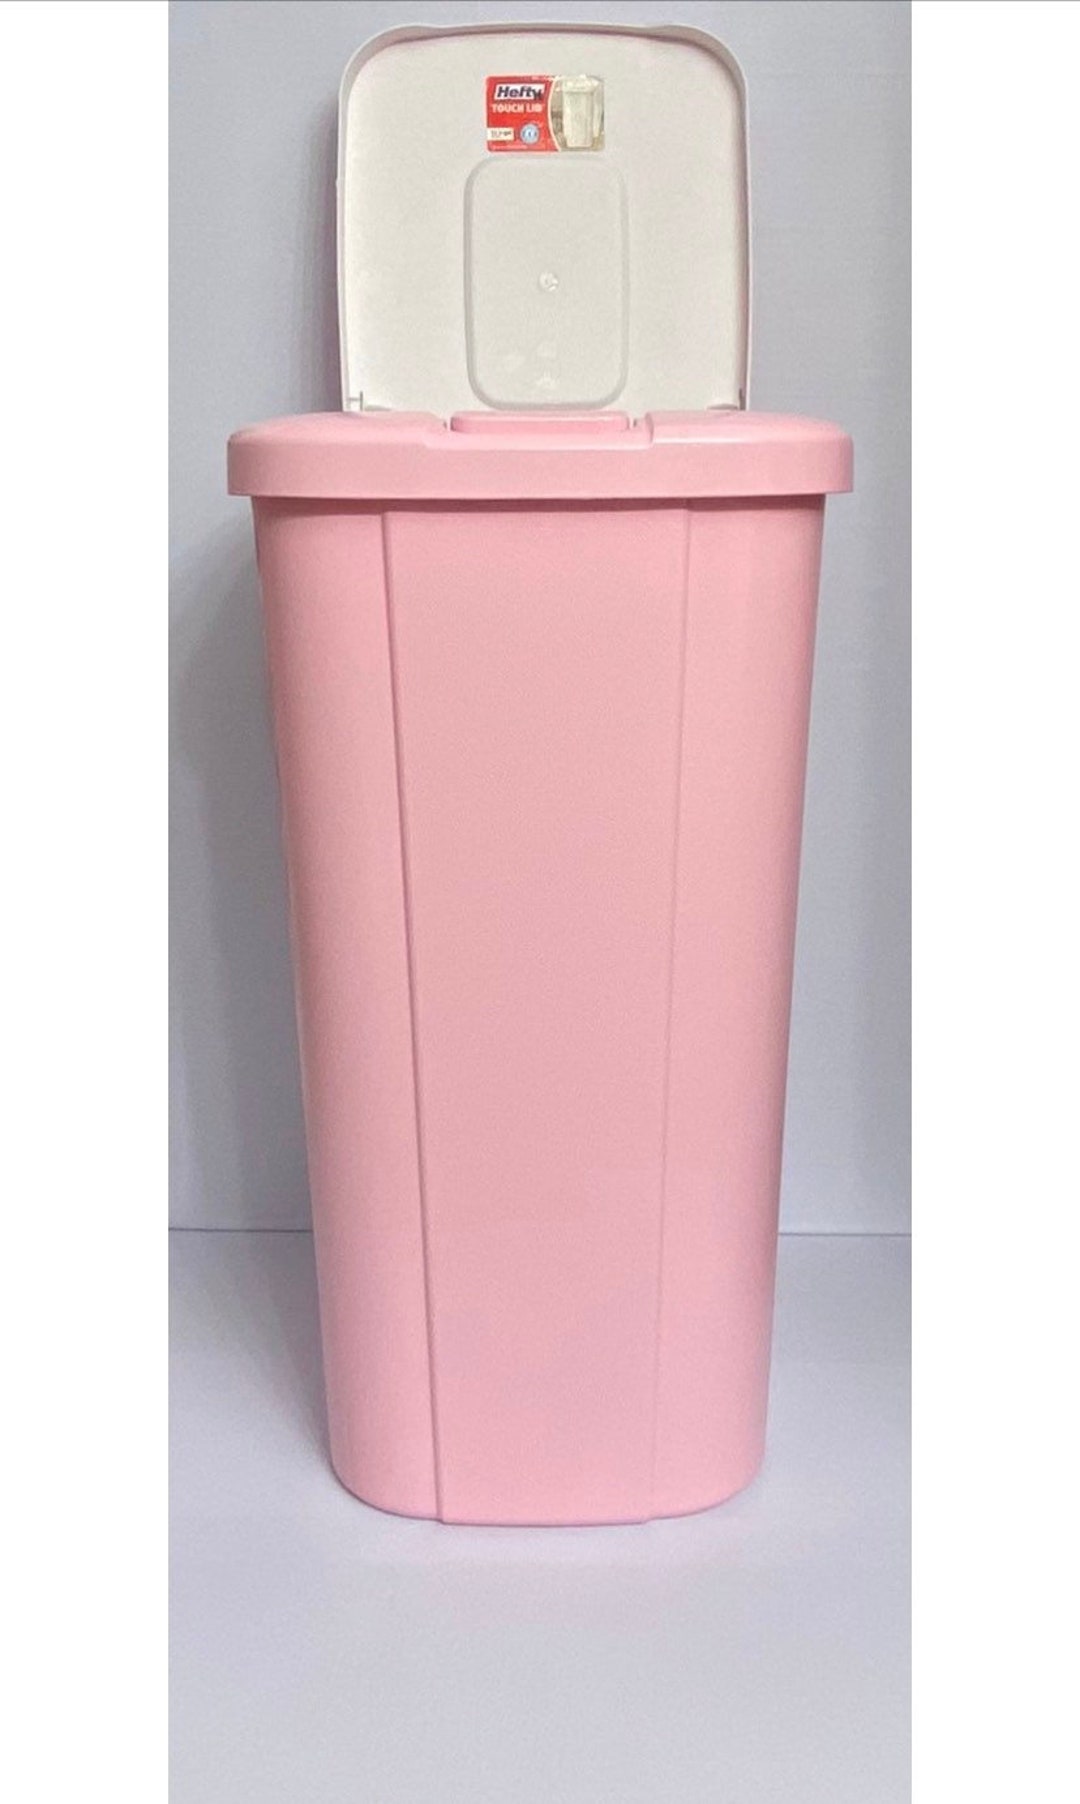 Pink 13.3 Gallon Hefty Trash Can, Pink Trash Can, Pink Garbage